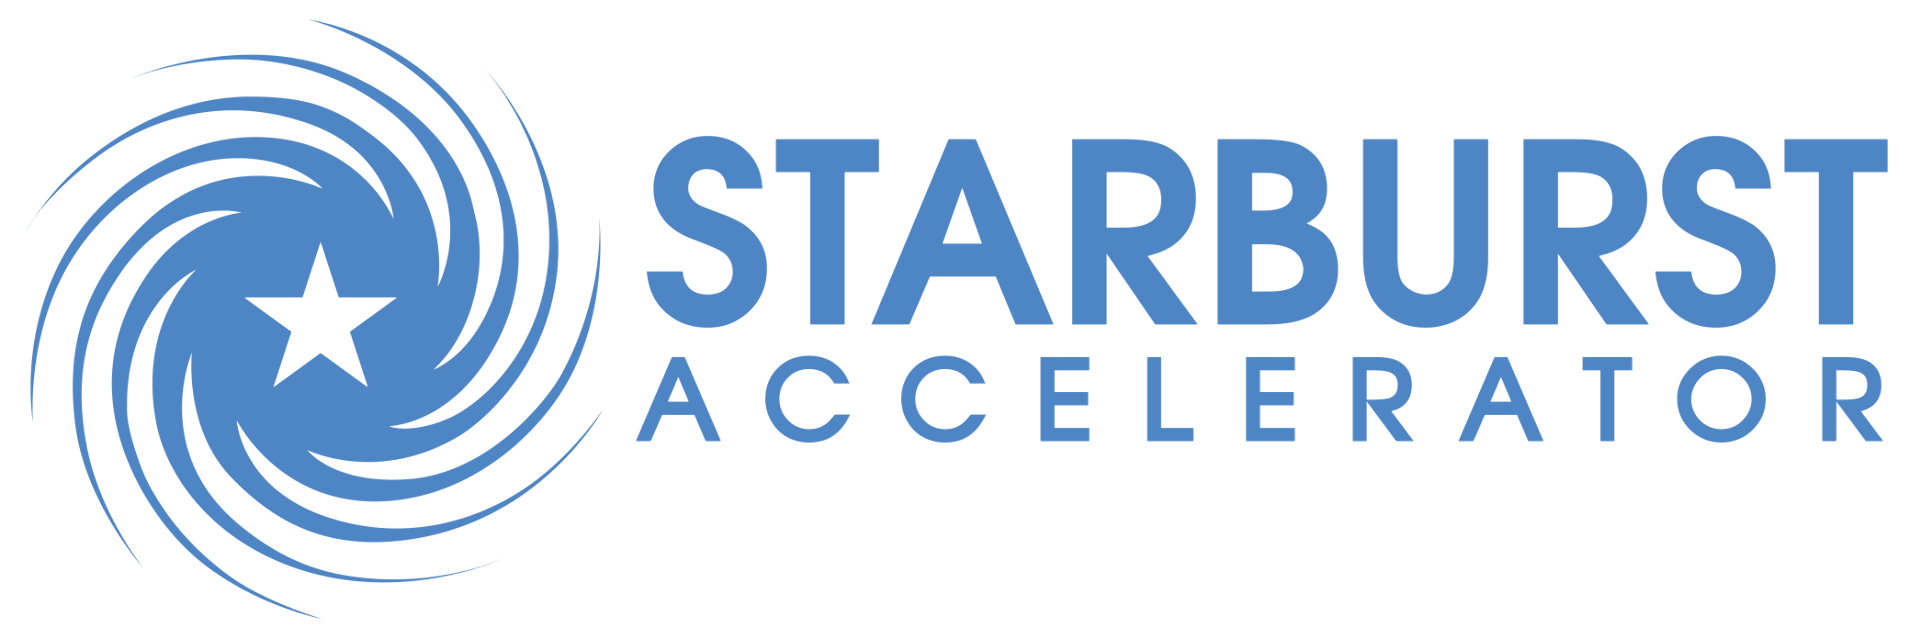 Starburst Accelerator set for Singapore launch